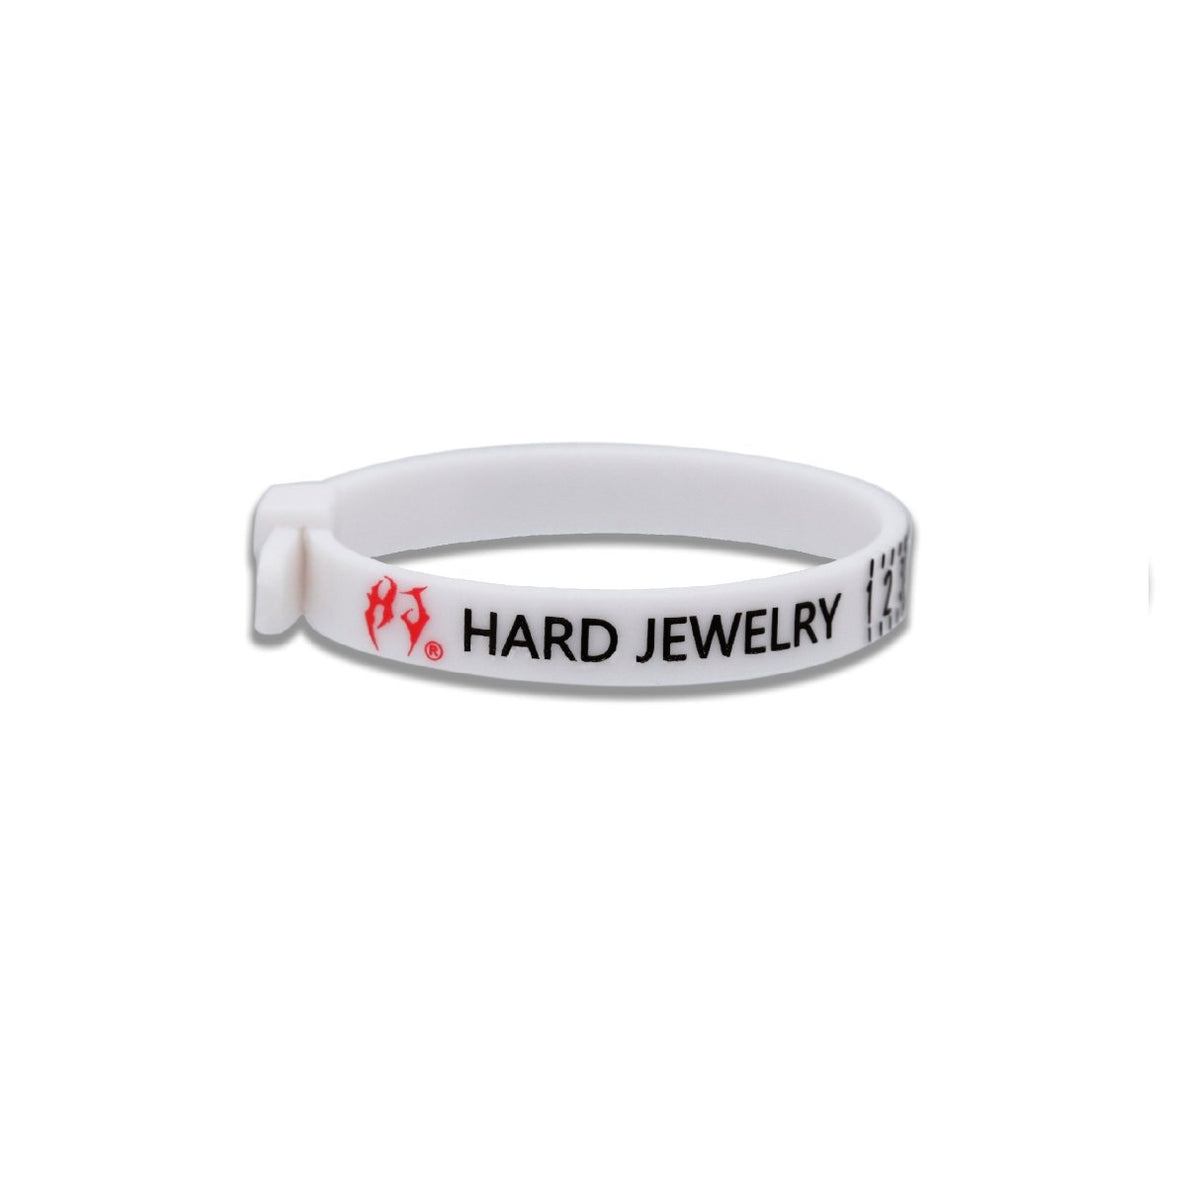 HARD JEWELRY RING SIZER - Hard Jewelry™